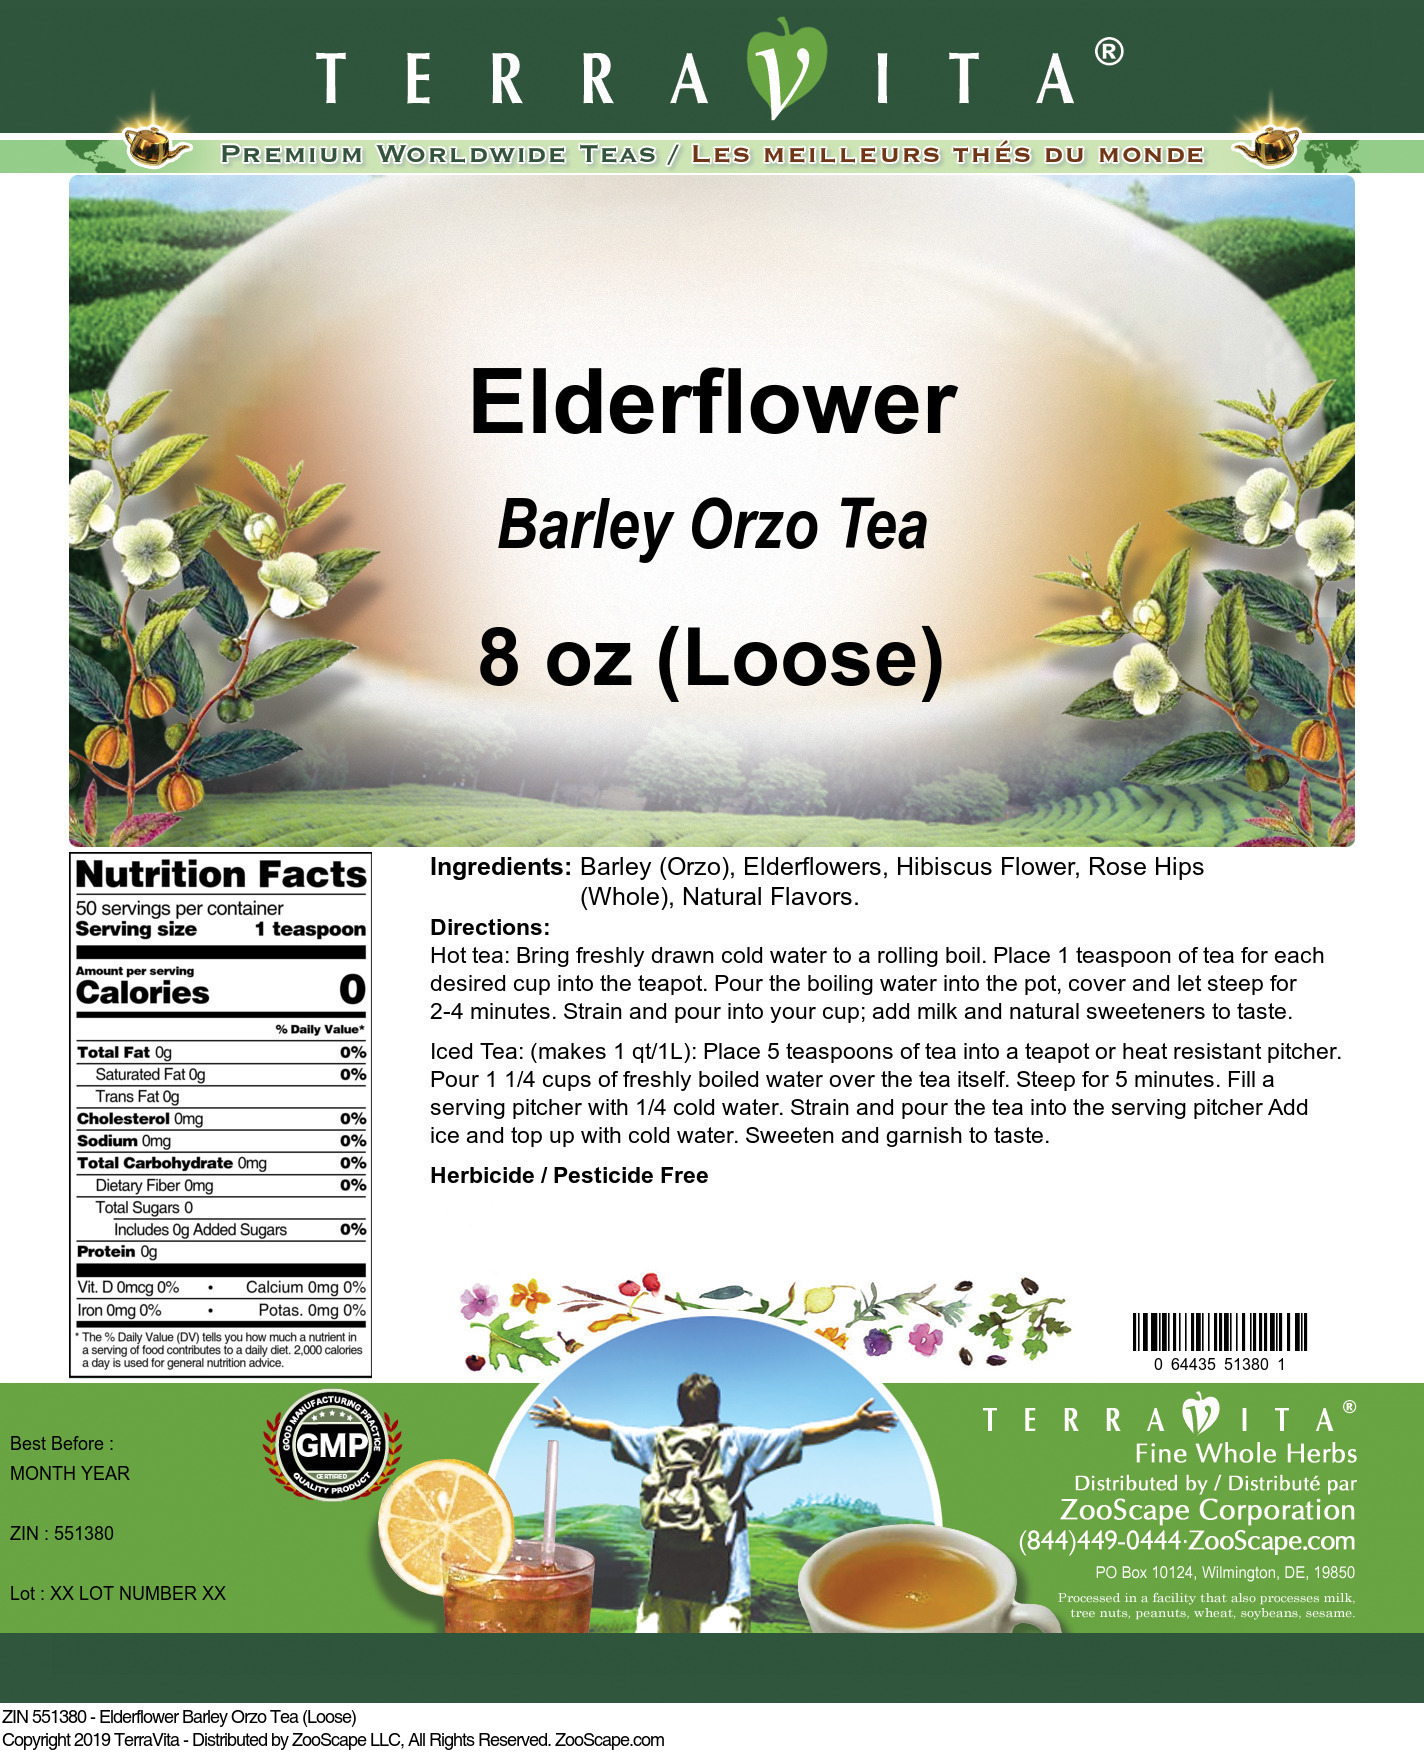 Elderflower Barley Orzo Tea (Loose) - Label